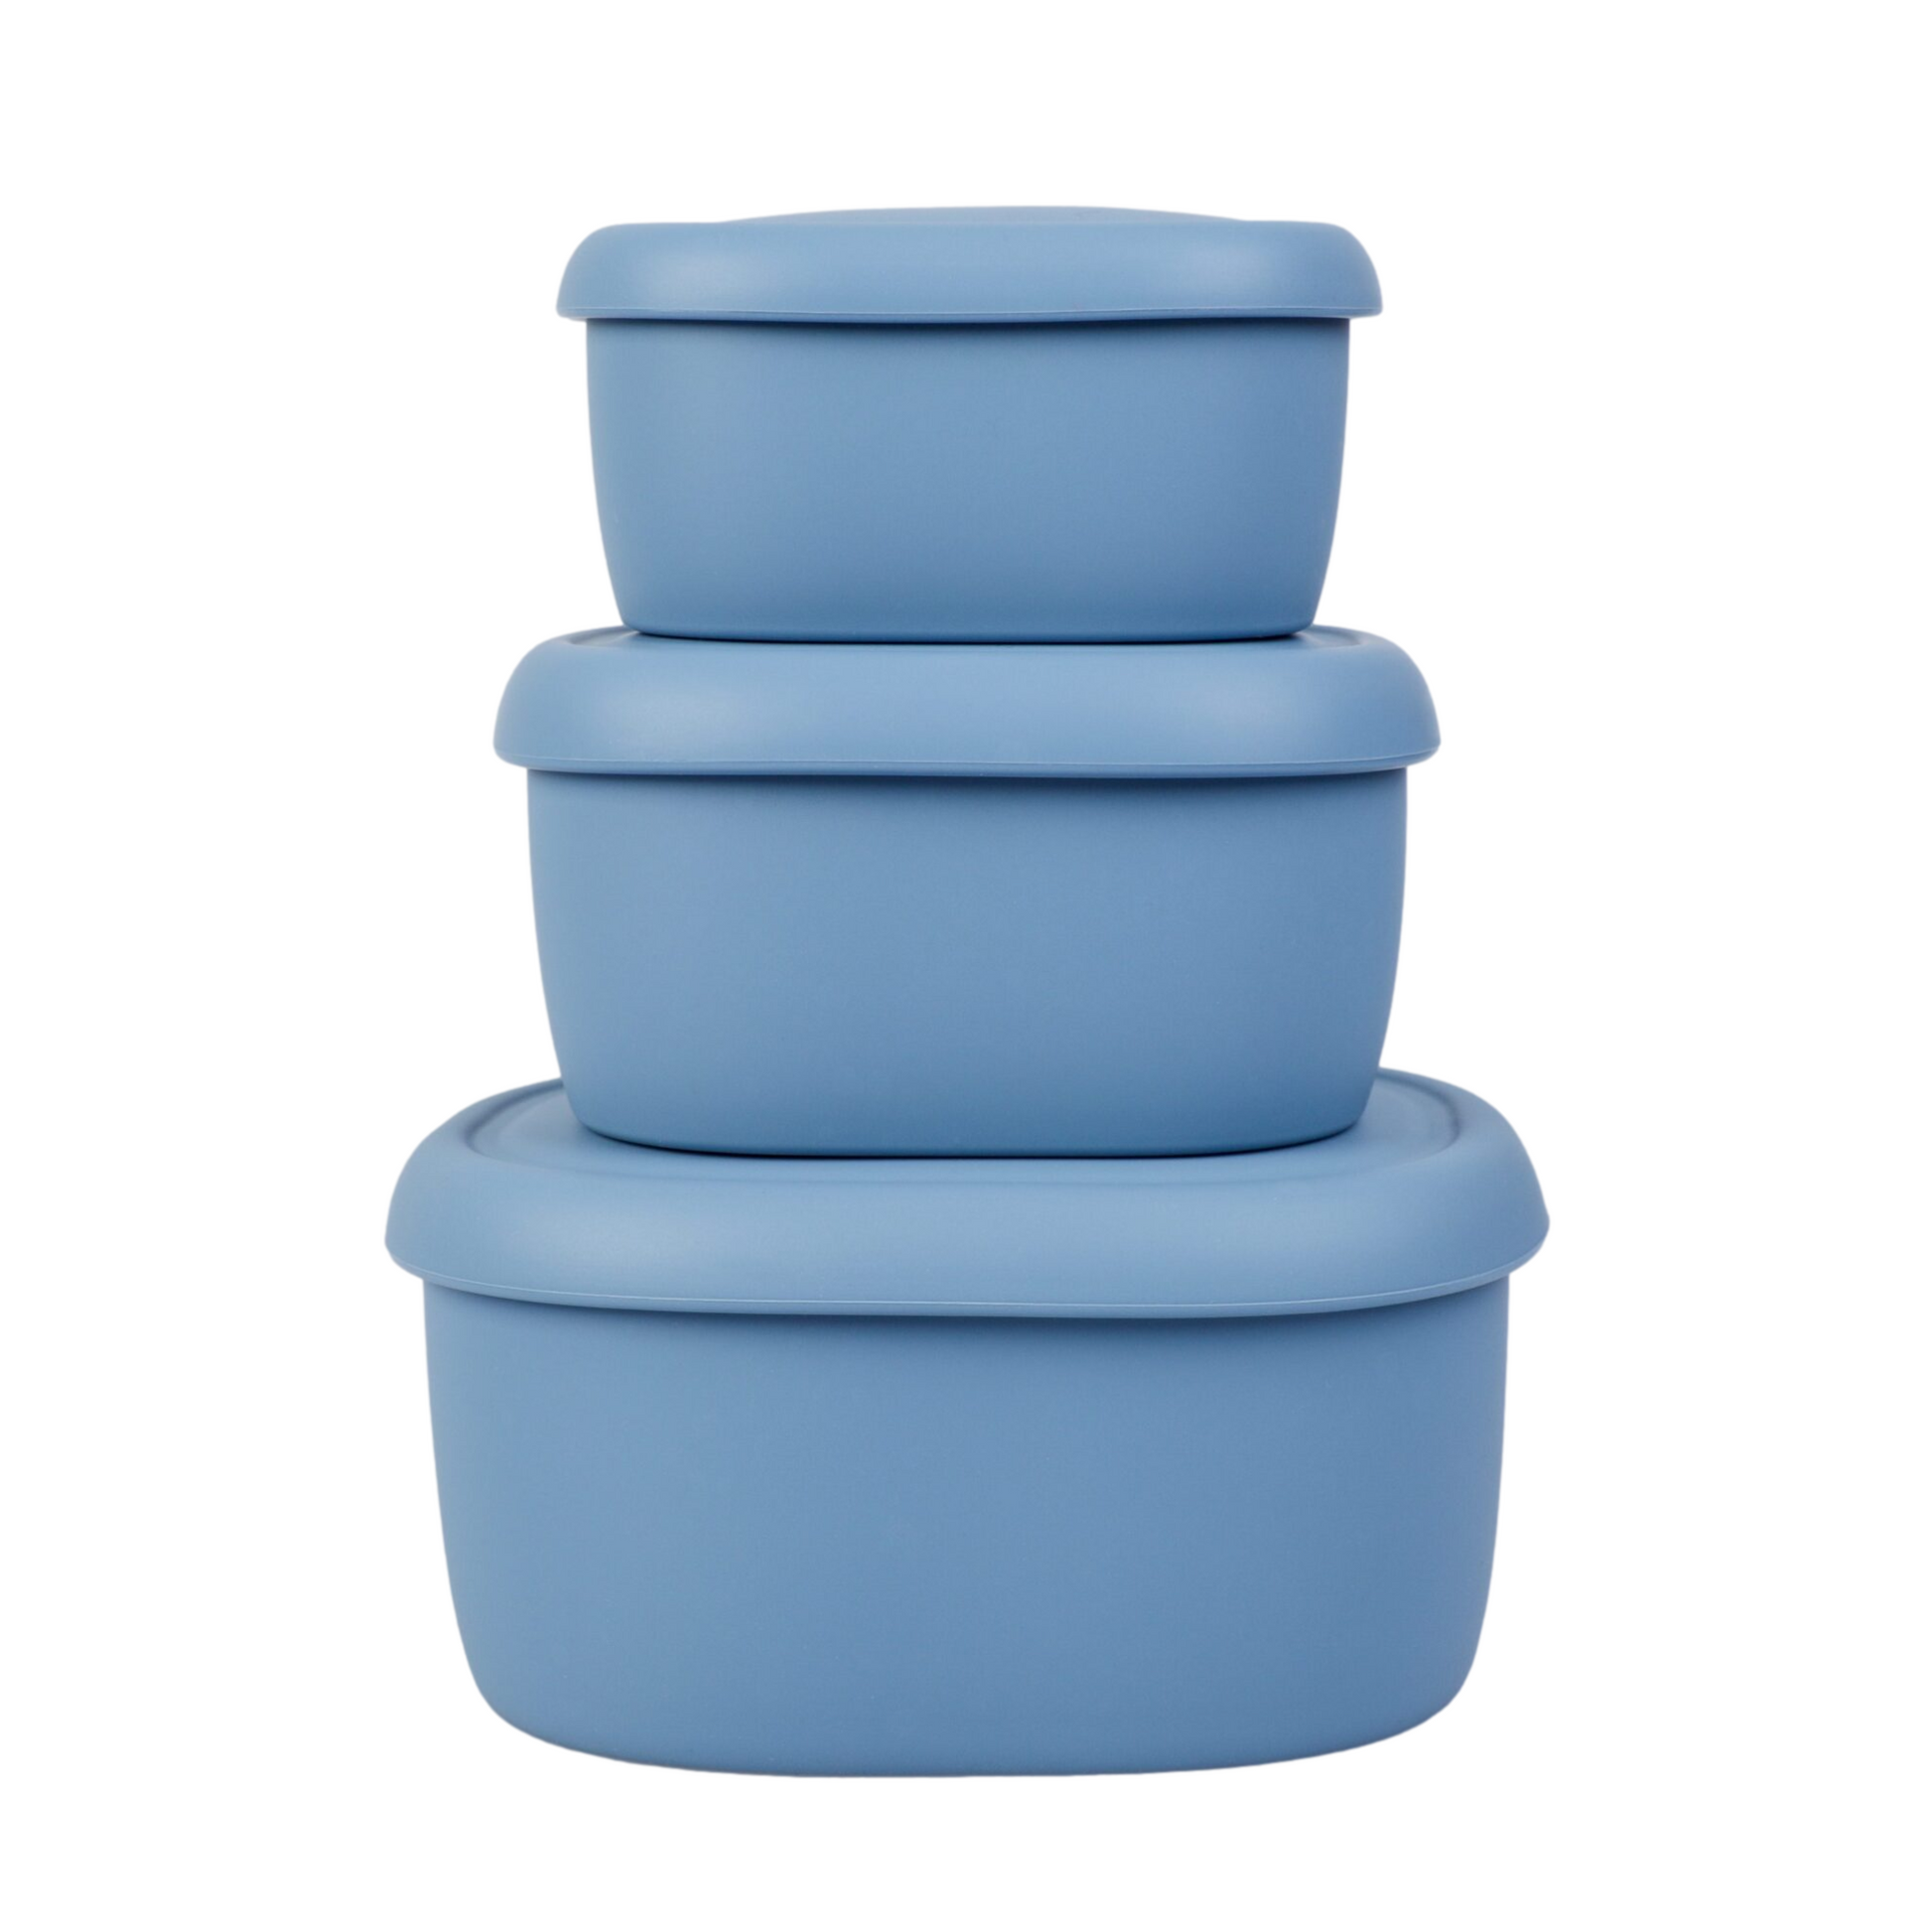 Biagino 24 oz. Food Storage Container (Set of 10) Prep & Savour Color: Blue